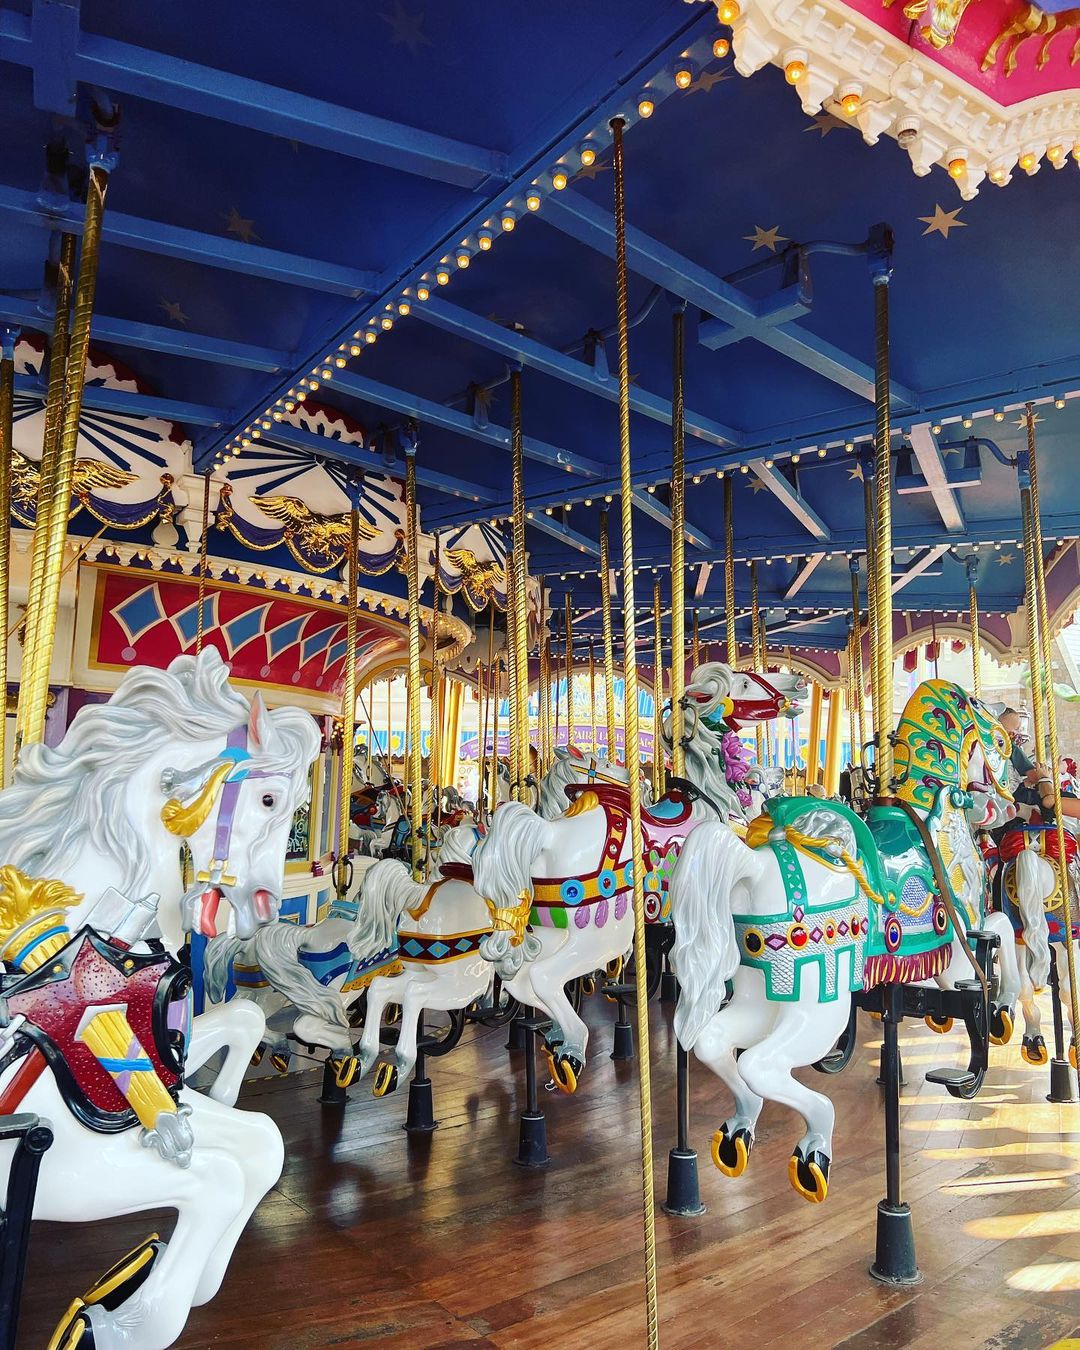 Prince Charming Regal Carrousel - Magic Kingdom Attraktion